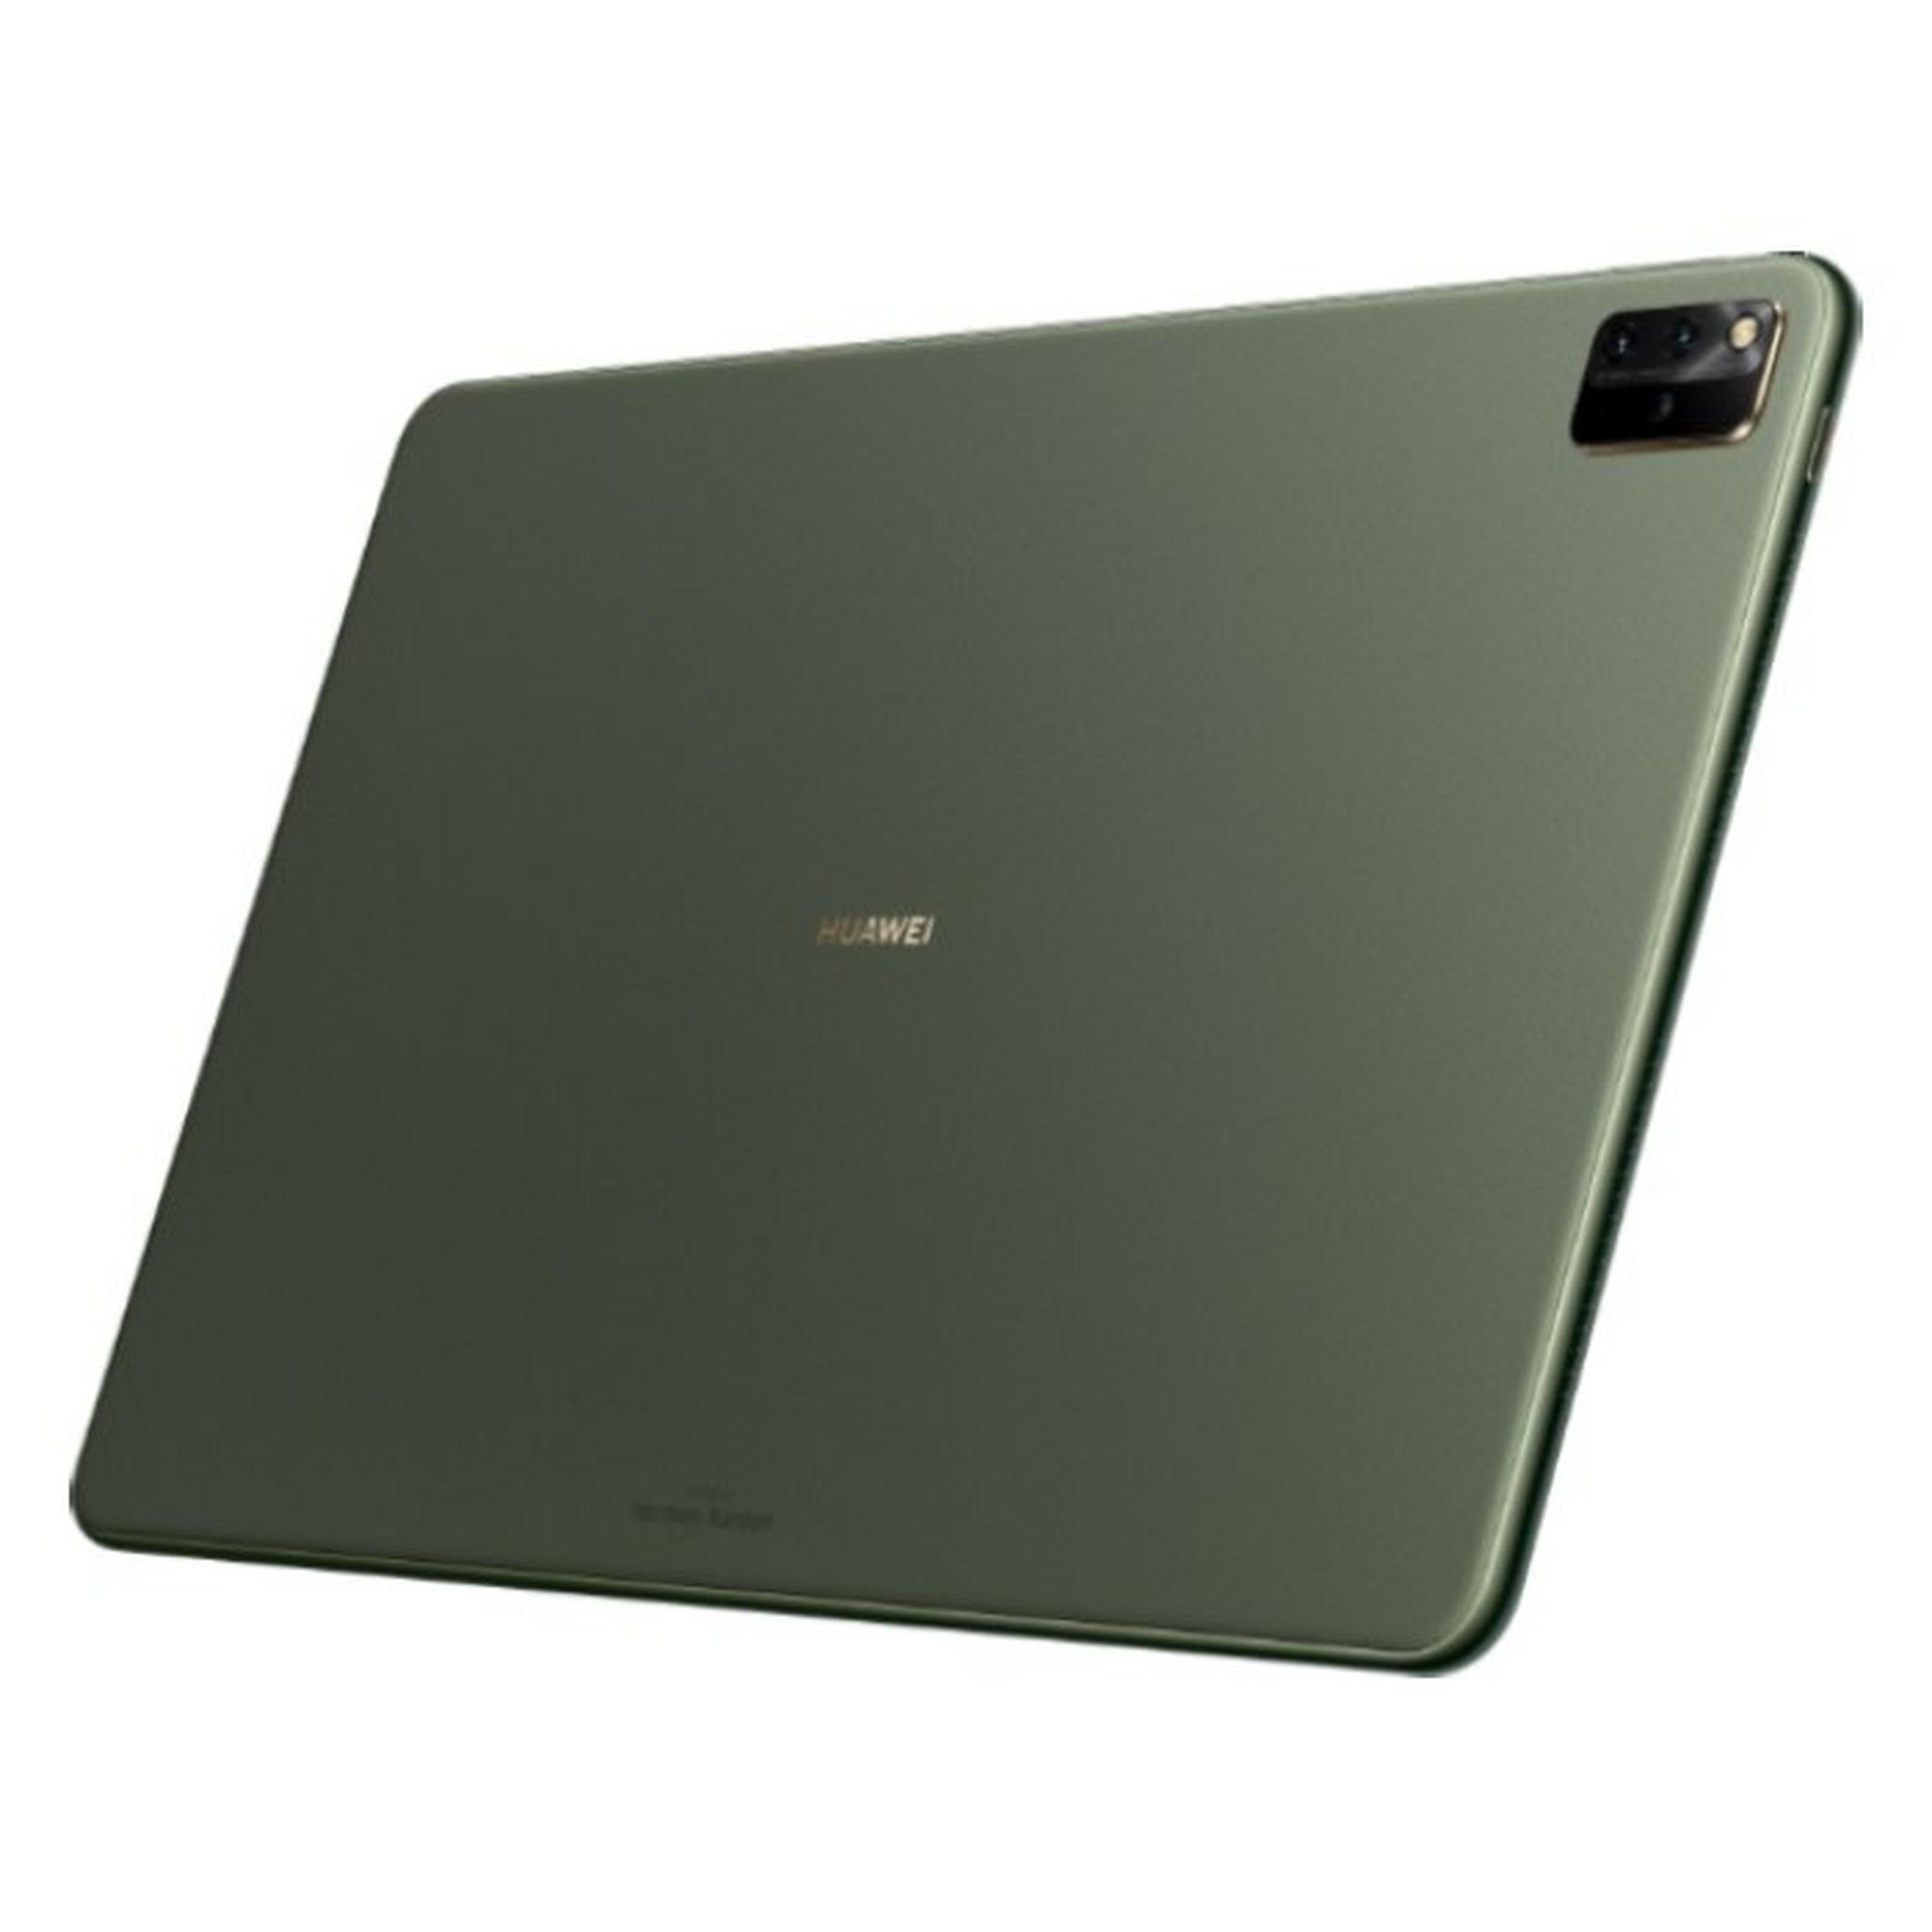 Huawei Matepad Pro 12 Wi-Fi, 256GB, 12.6-inch Tablet - Green